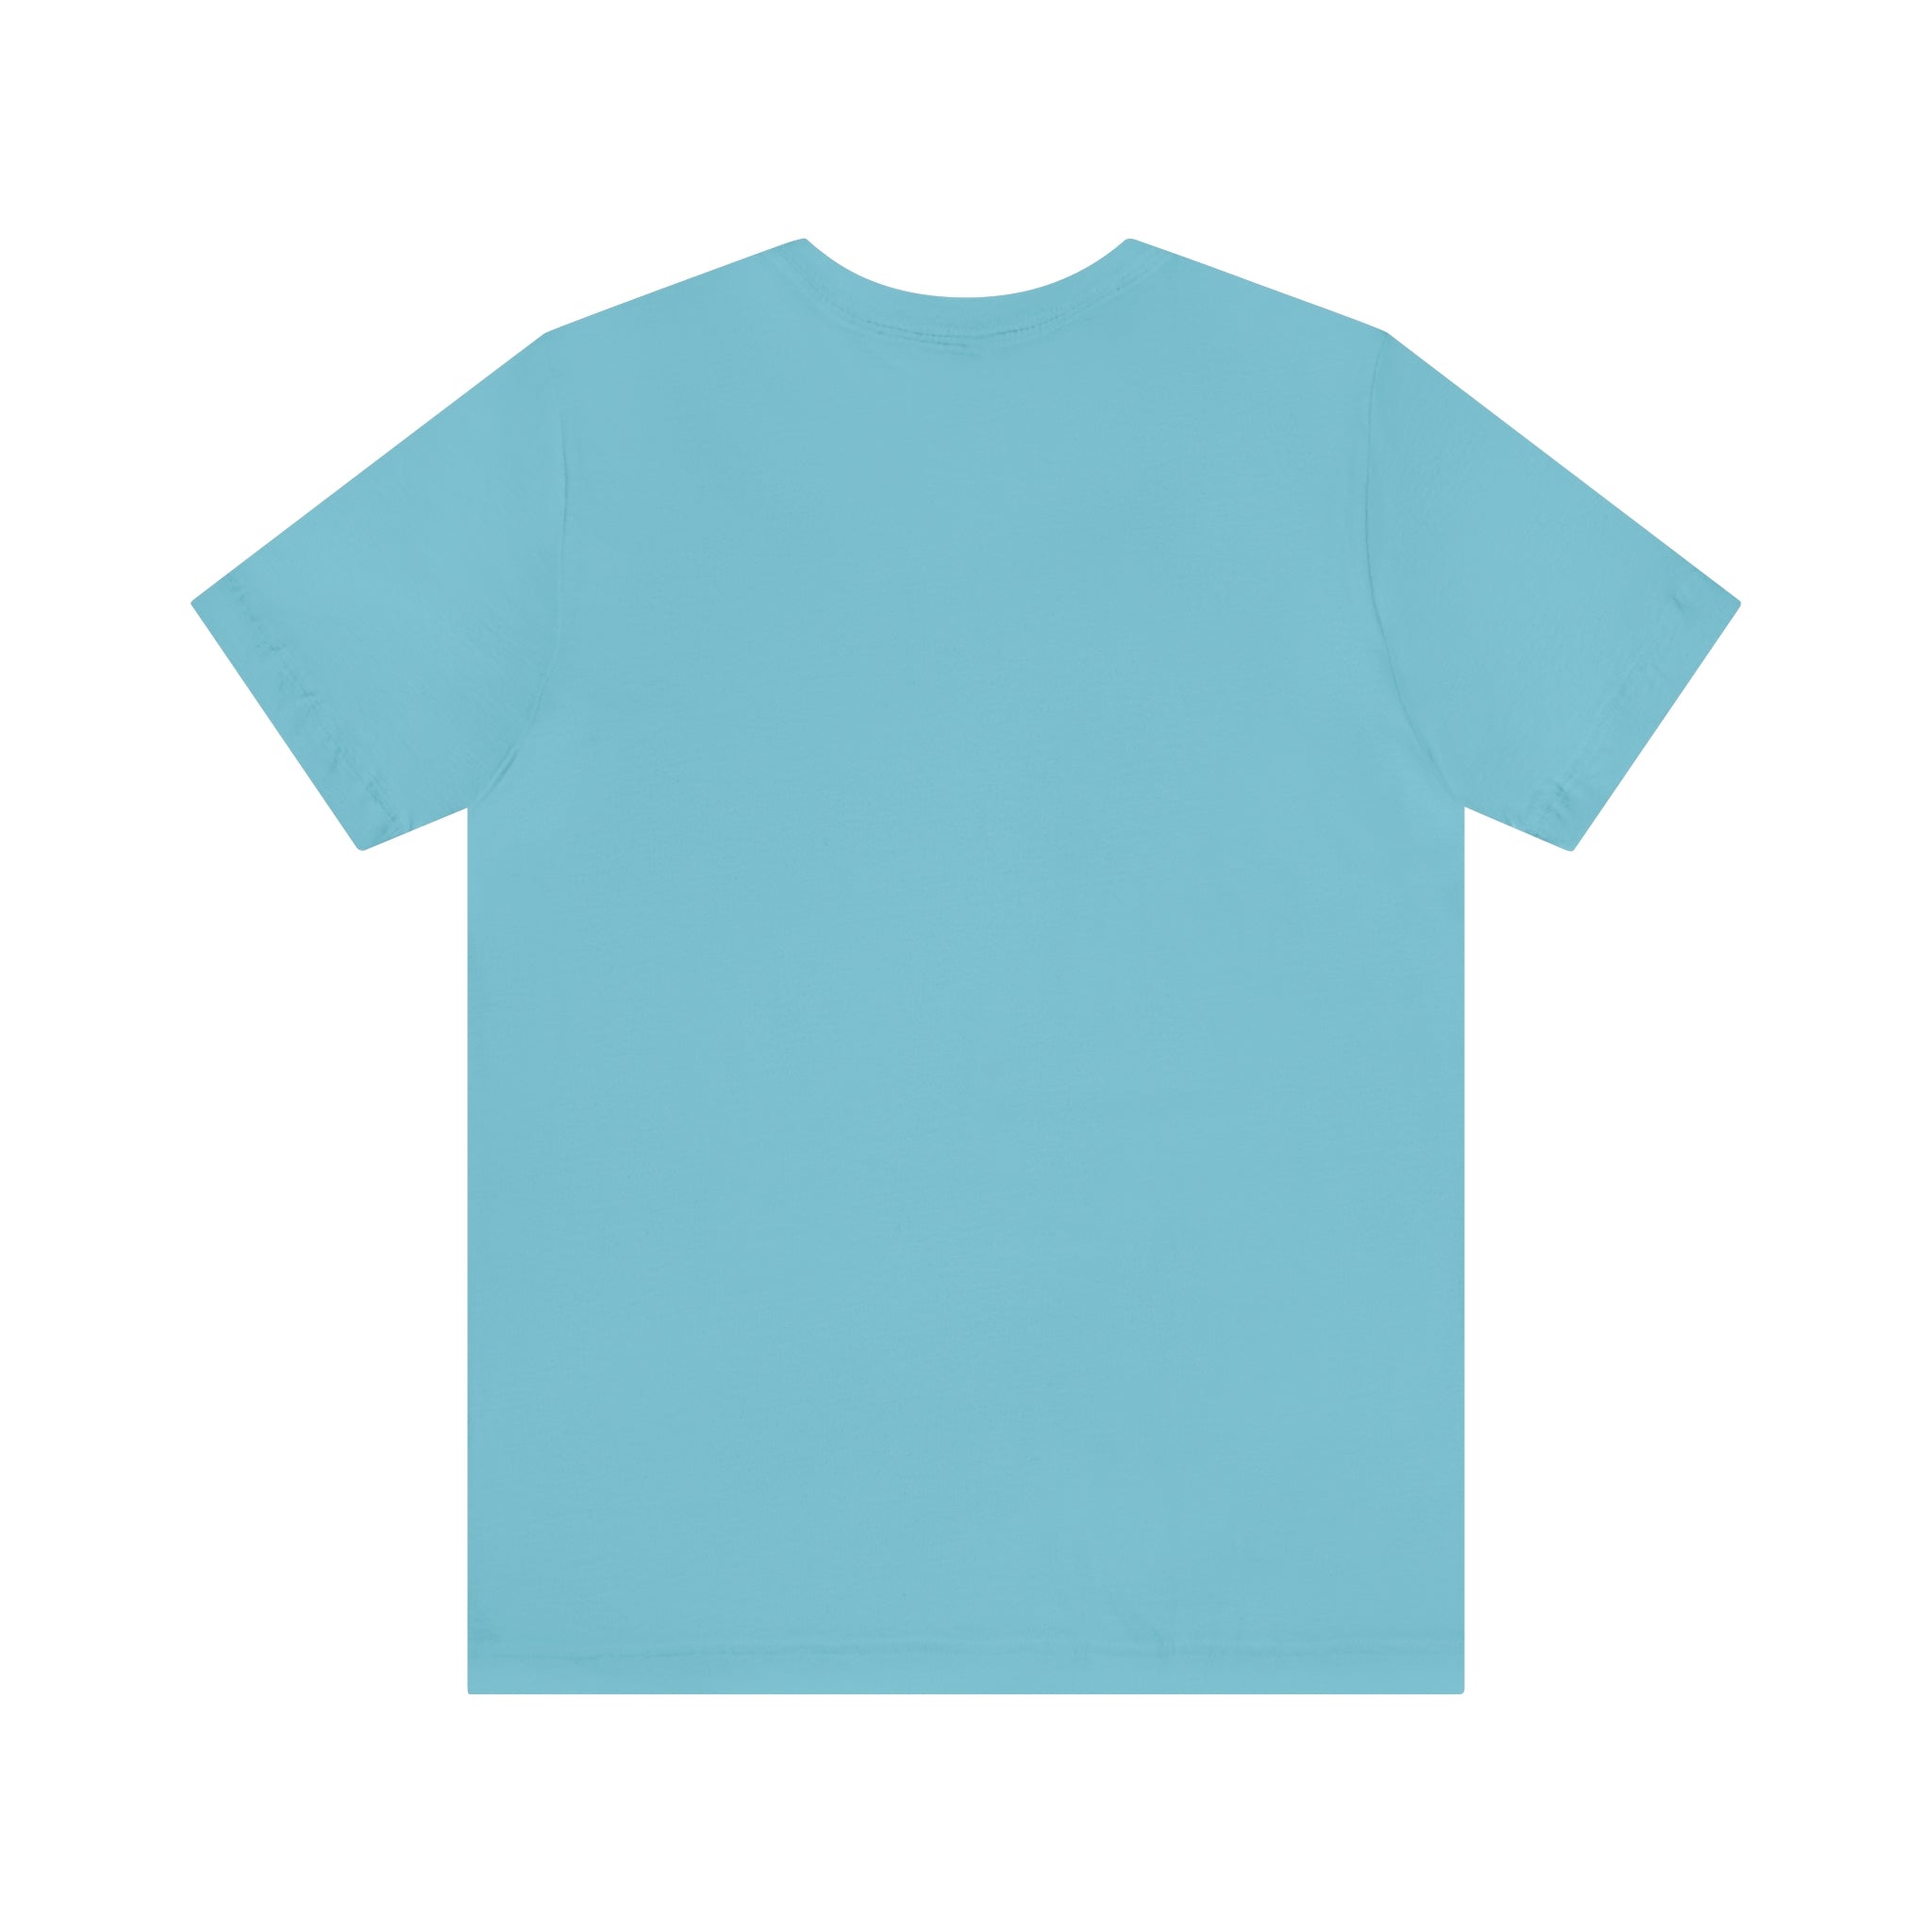 Printify T-Shirt Flossing is fun! Unisex Jersey Short Sleeve Tee